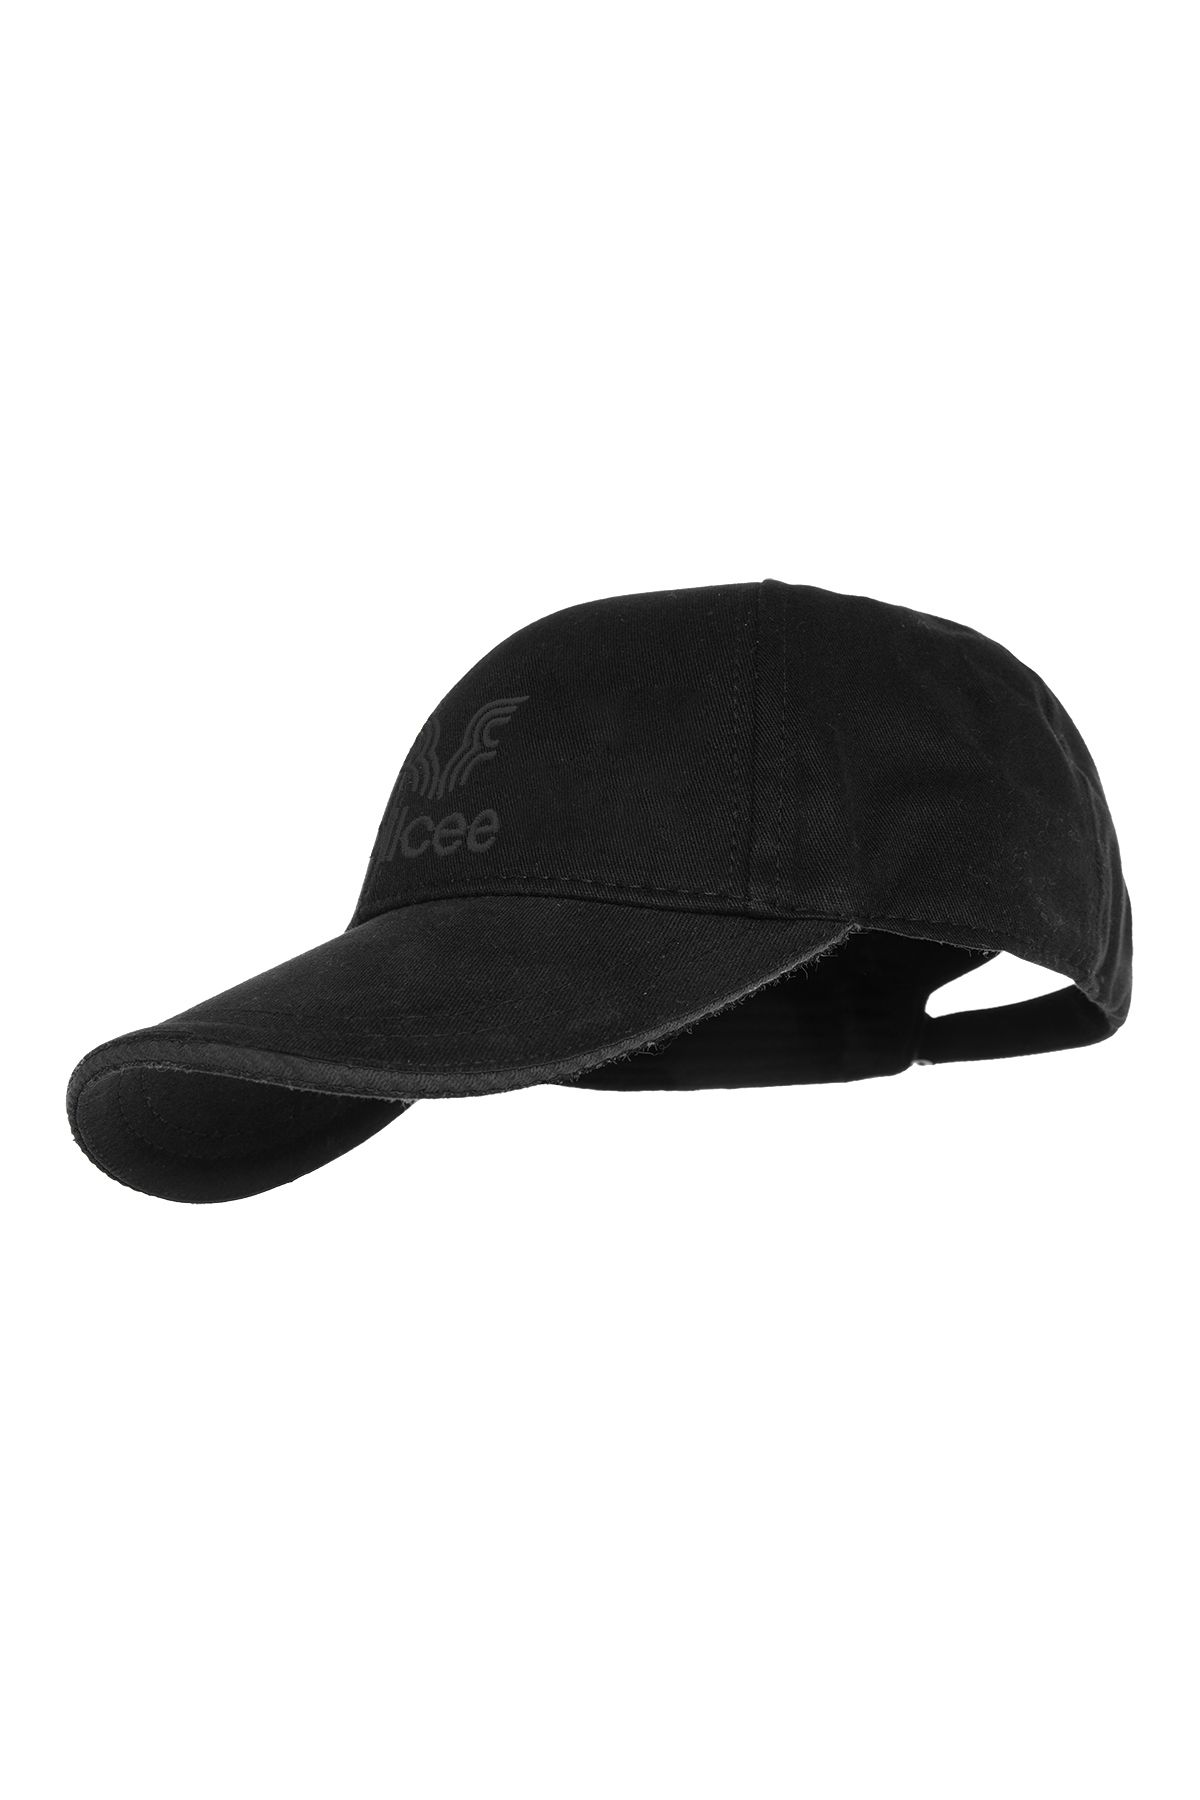 bilcee Unisex Siyah Şapka 1591